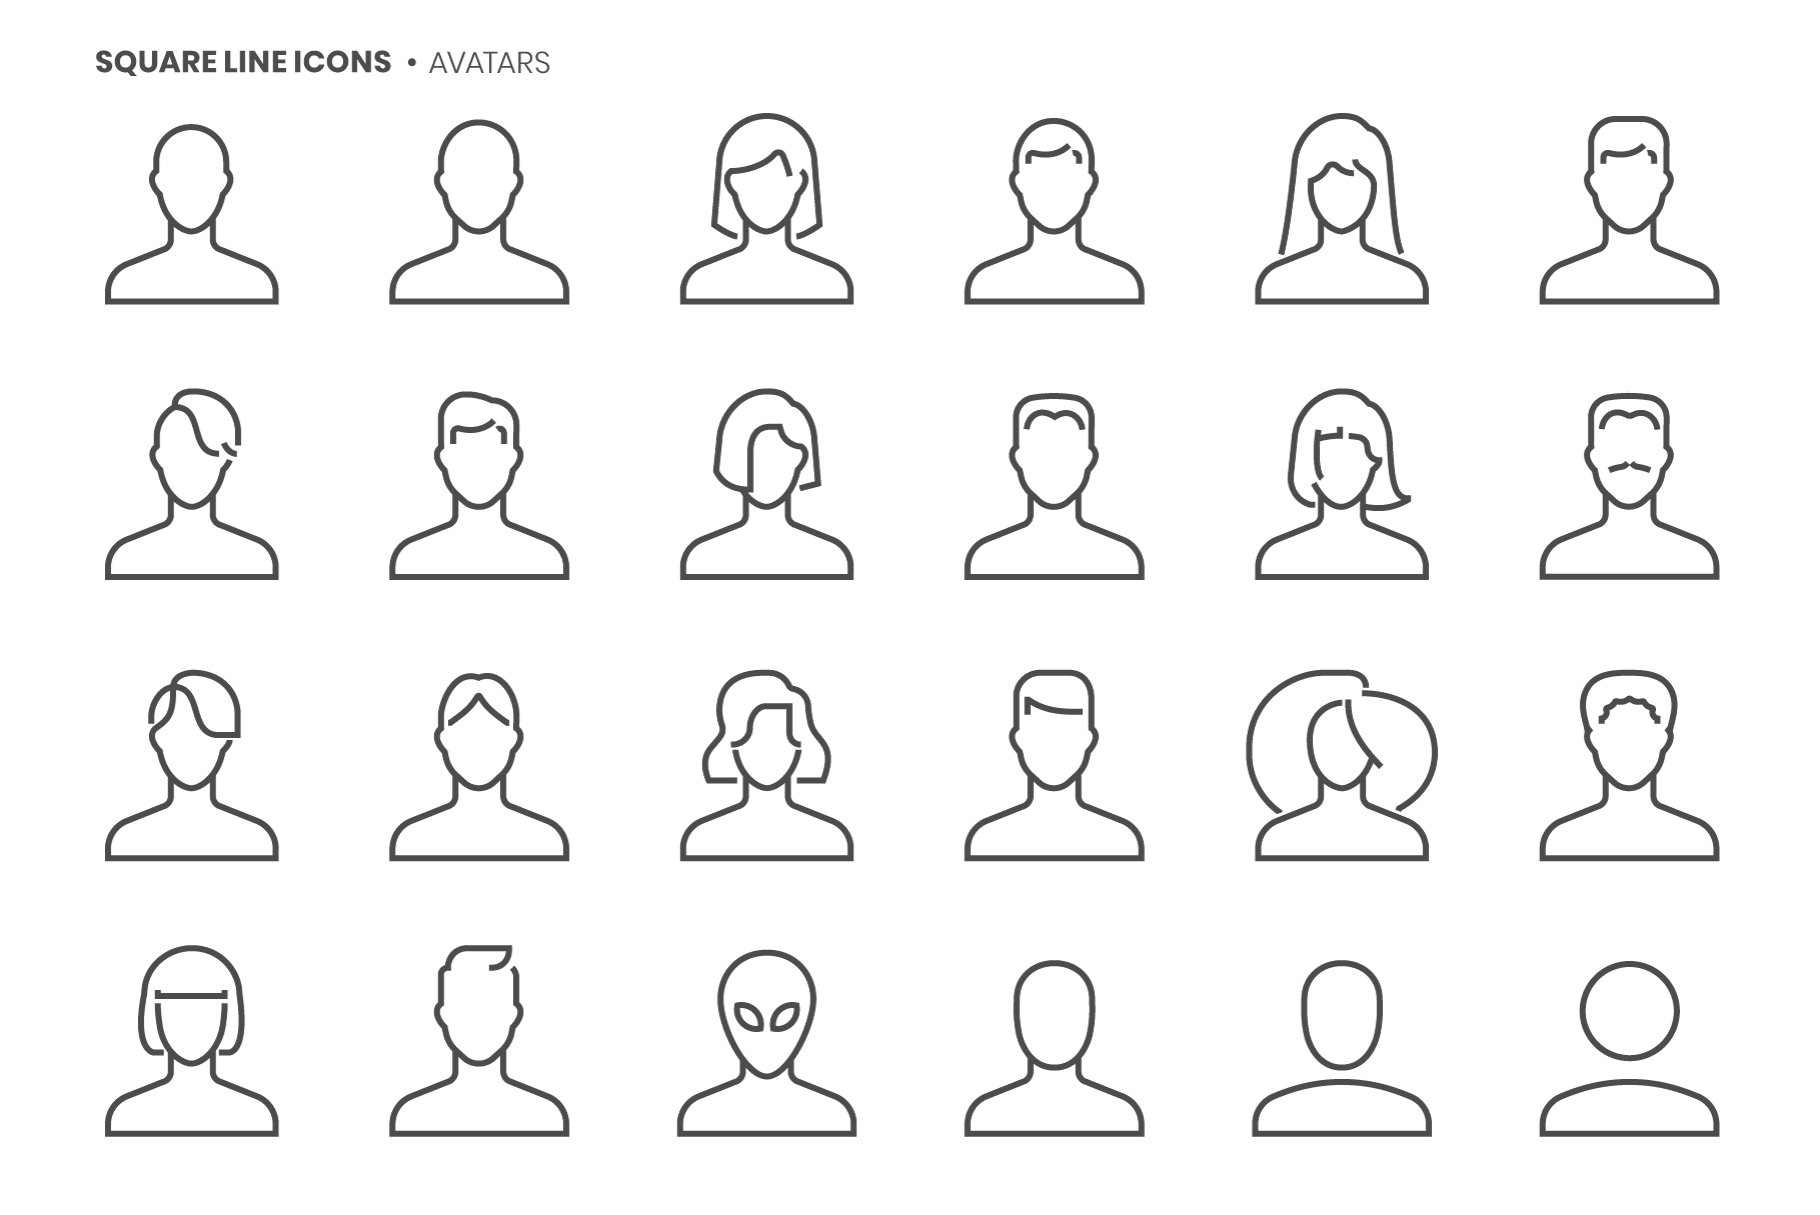 70 People & Avatar Line Icon – MasterBundles